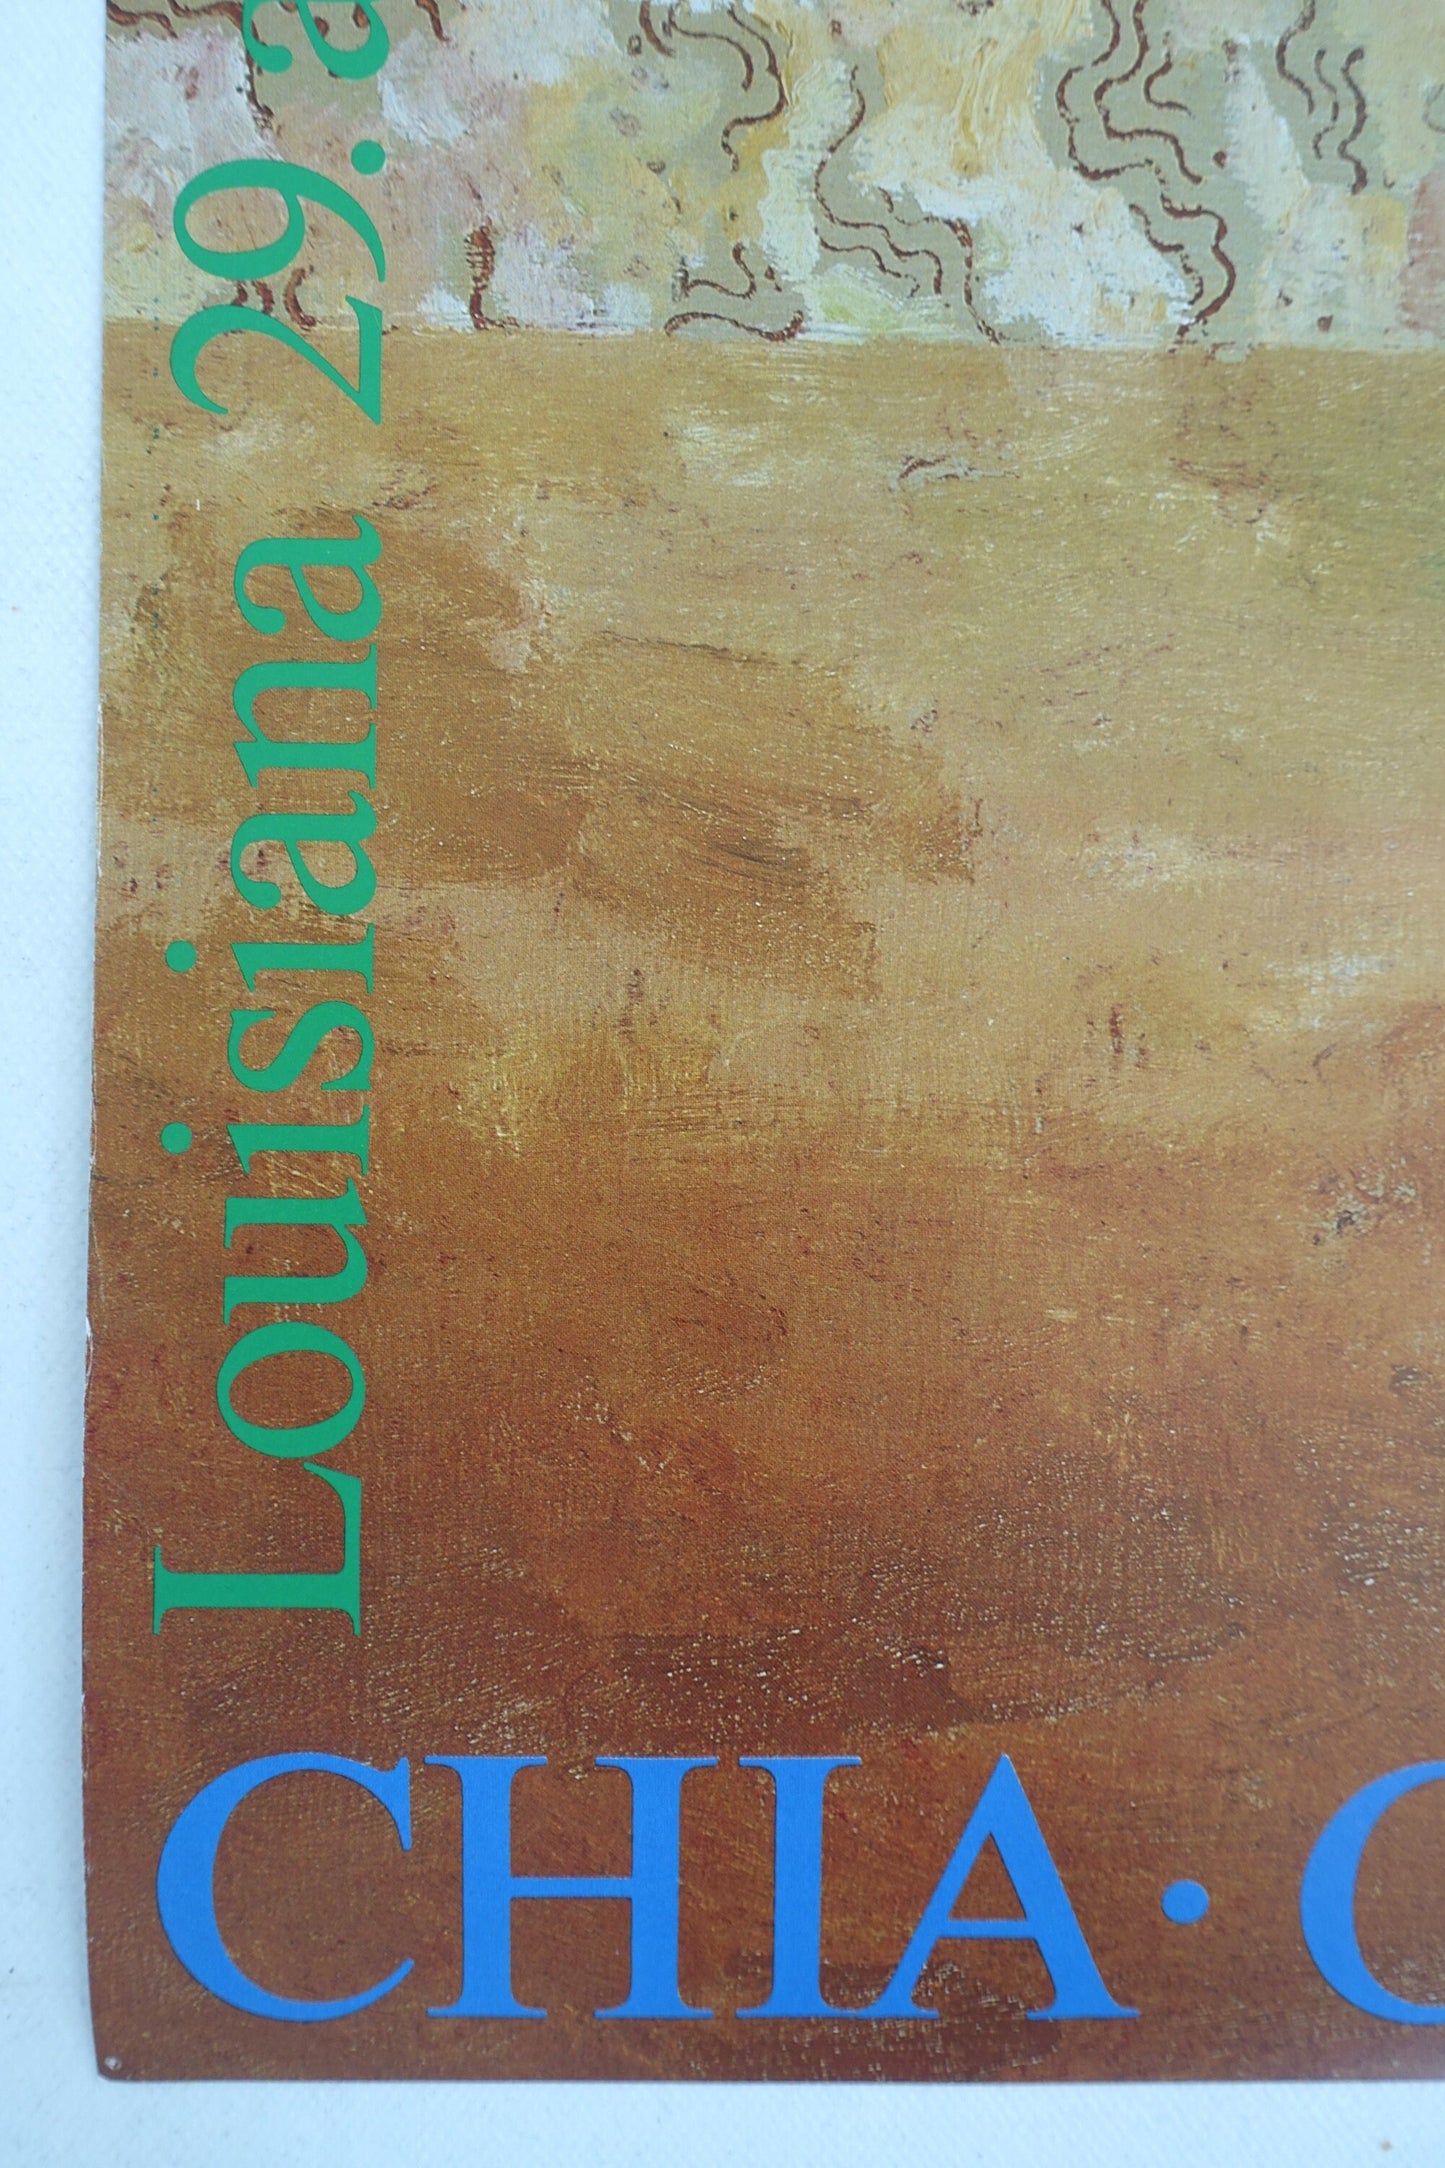 1983 Chia – Clemente – Cucchi on Louisiana Museum of Modern Art - Original Vintage Poster